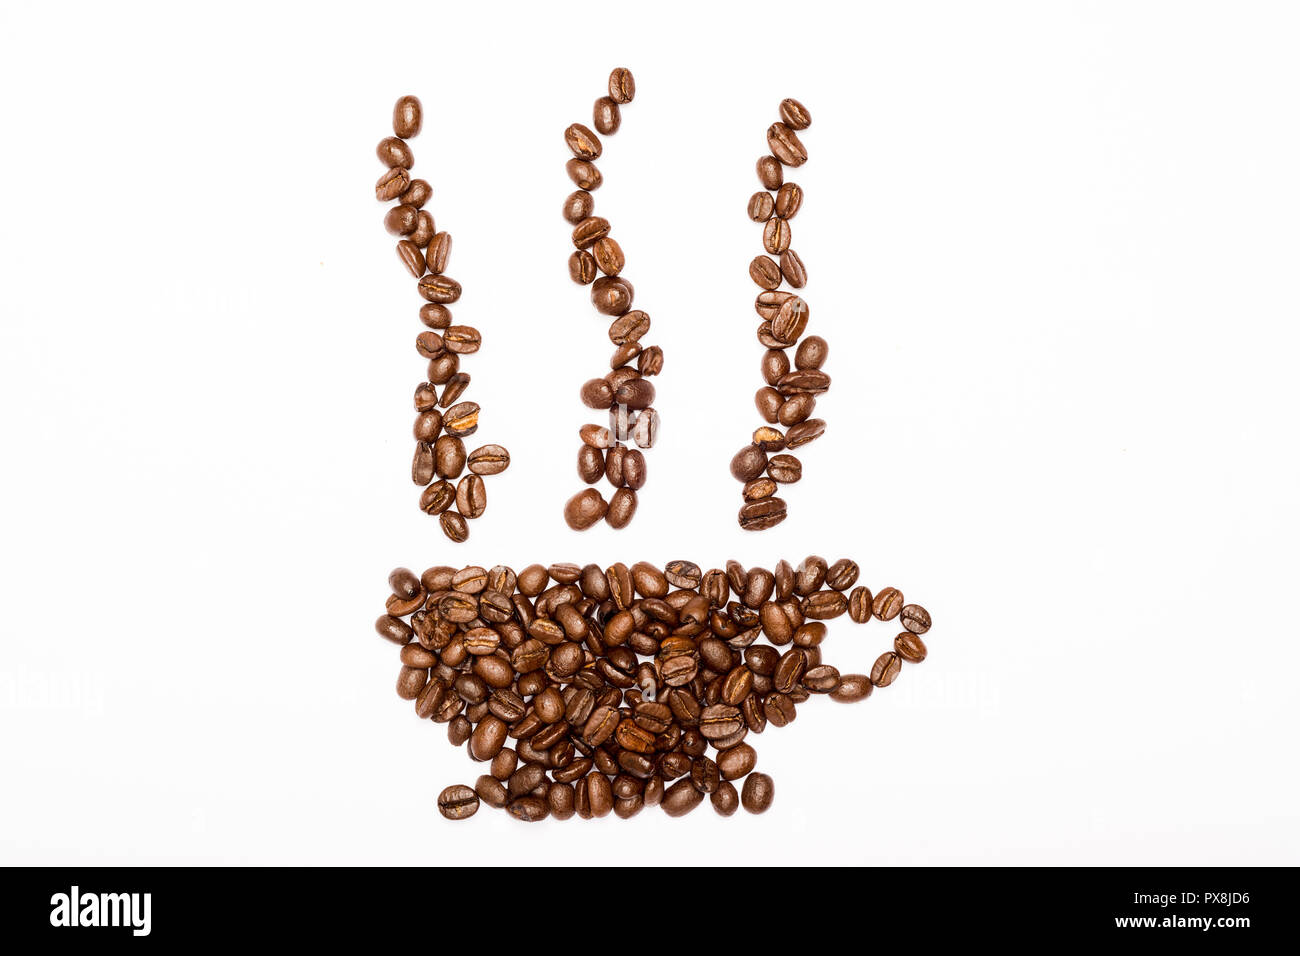 Tazza di caffè in chicchi di caffè su sfondo bianco. Venerdì 19 ottobre 2018. Foto Stock